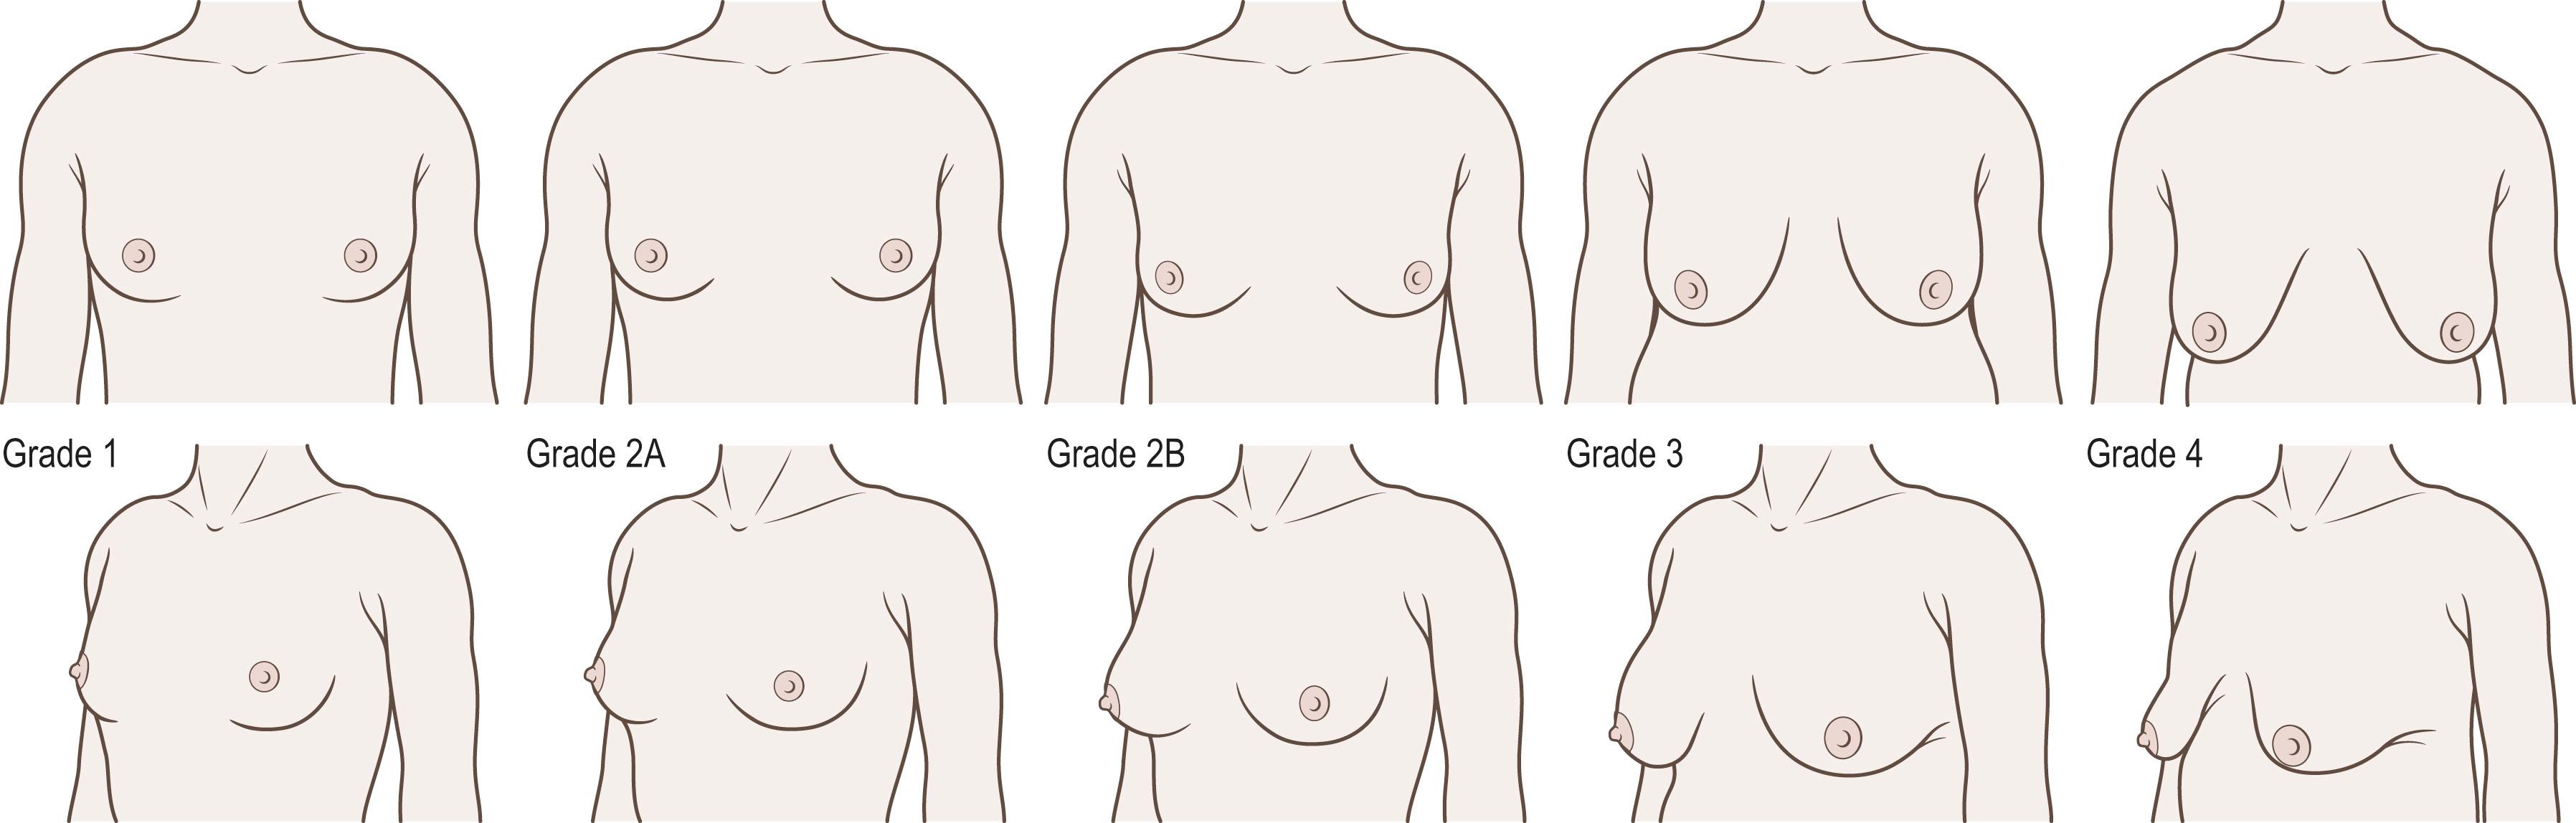 Figure 39.2, Fischer breast grading scale.